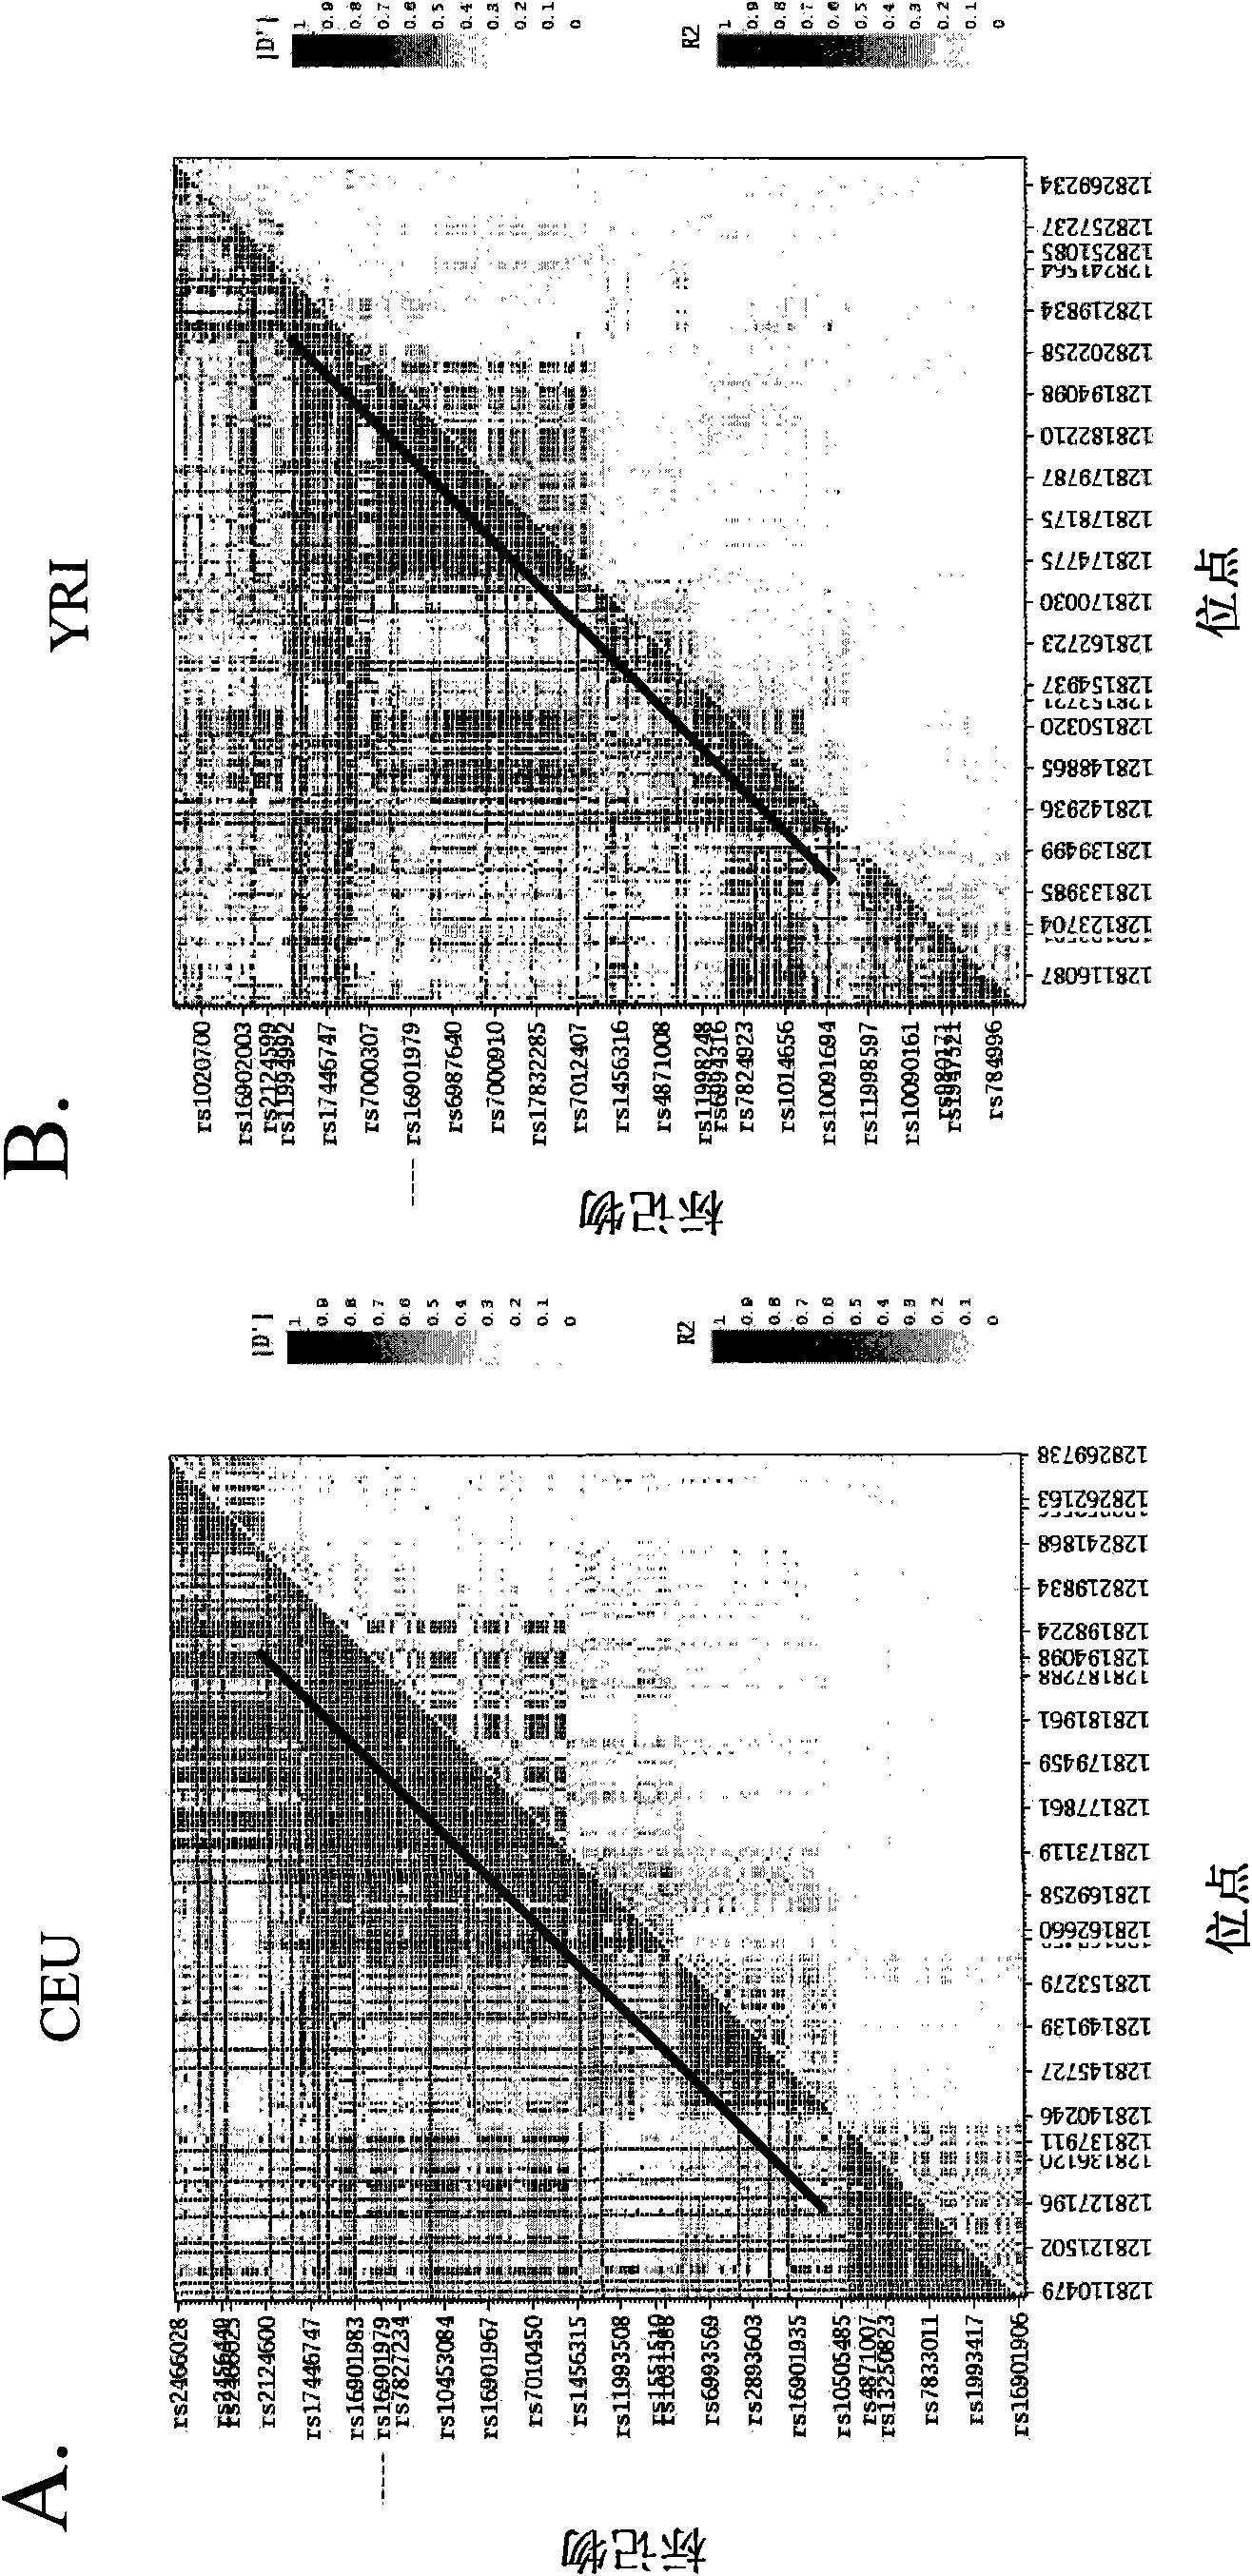 Cancer susceptibility variants on chr8q24.21